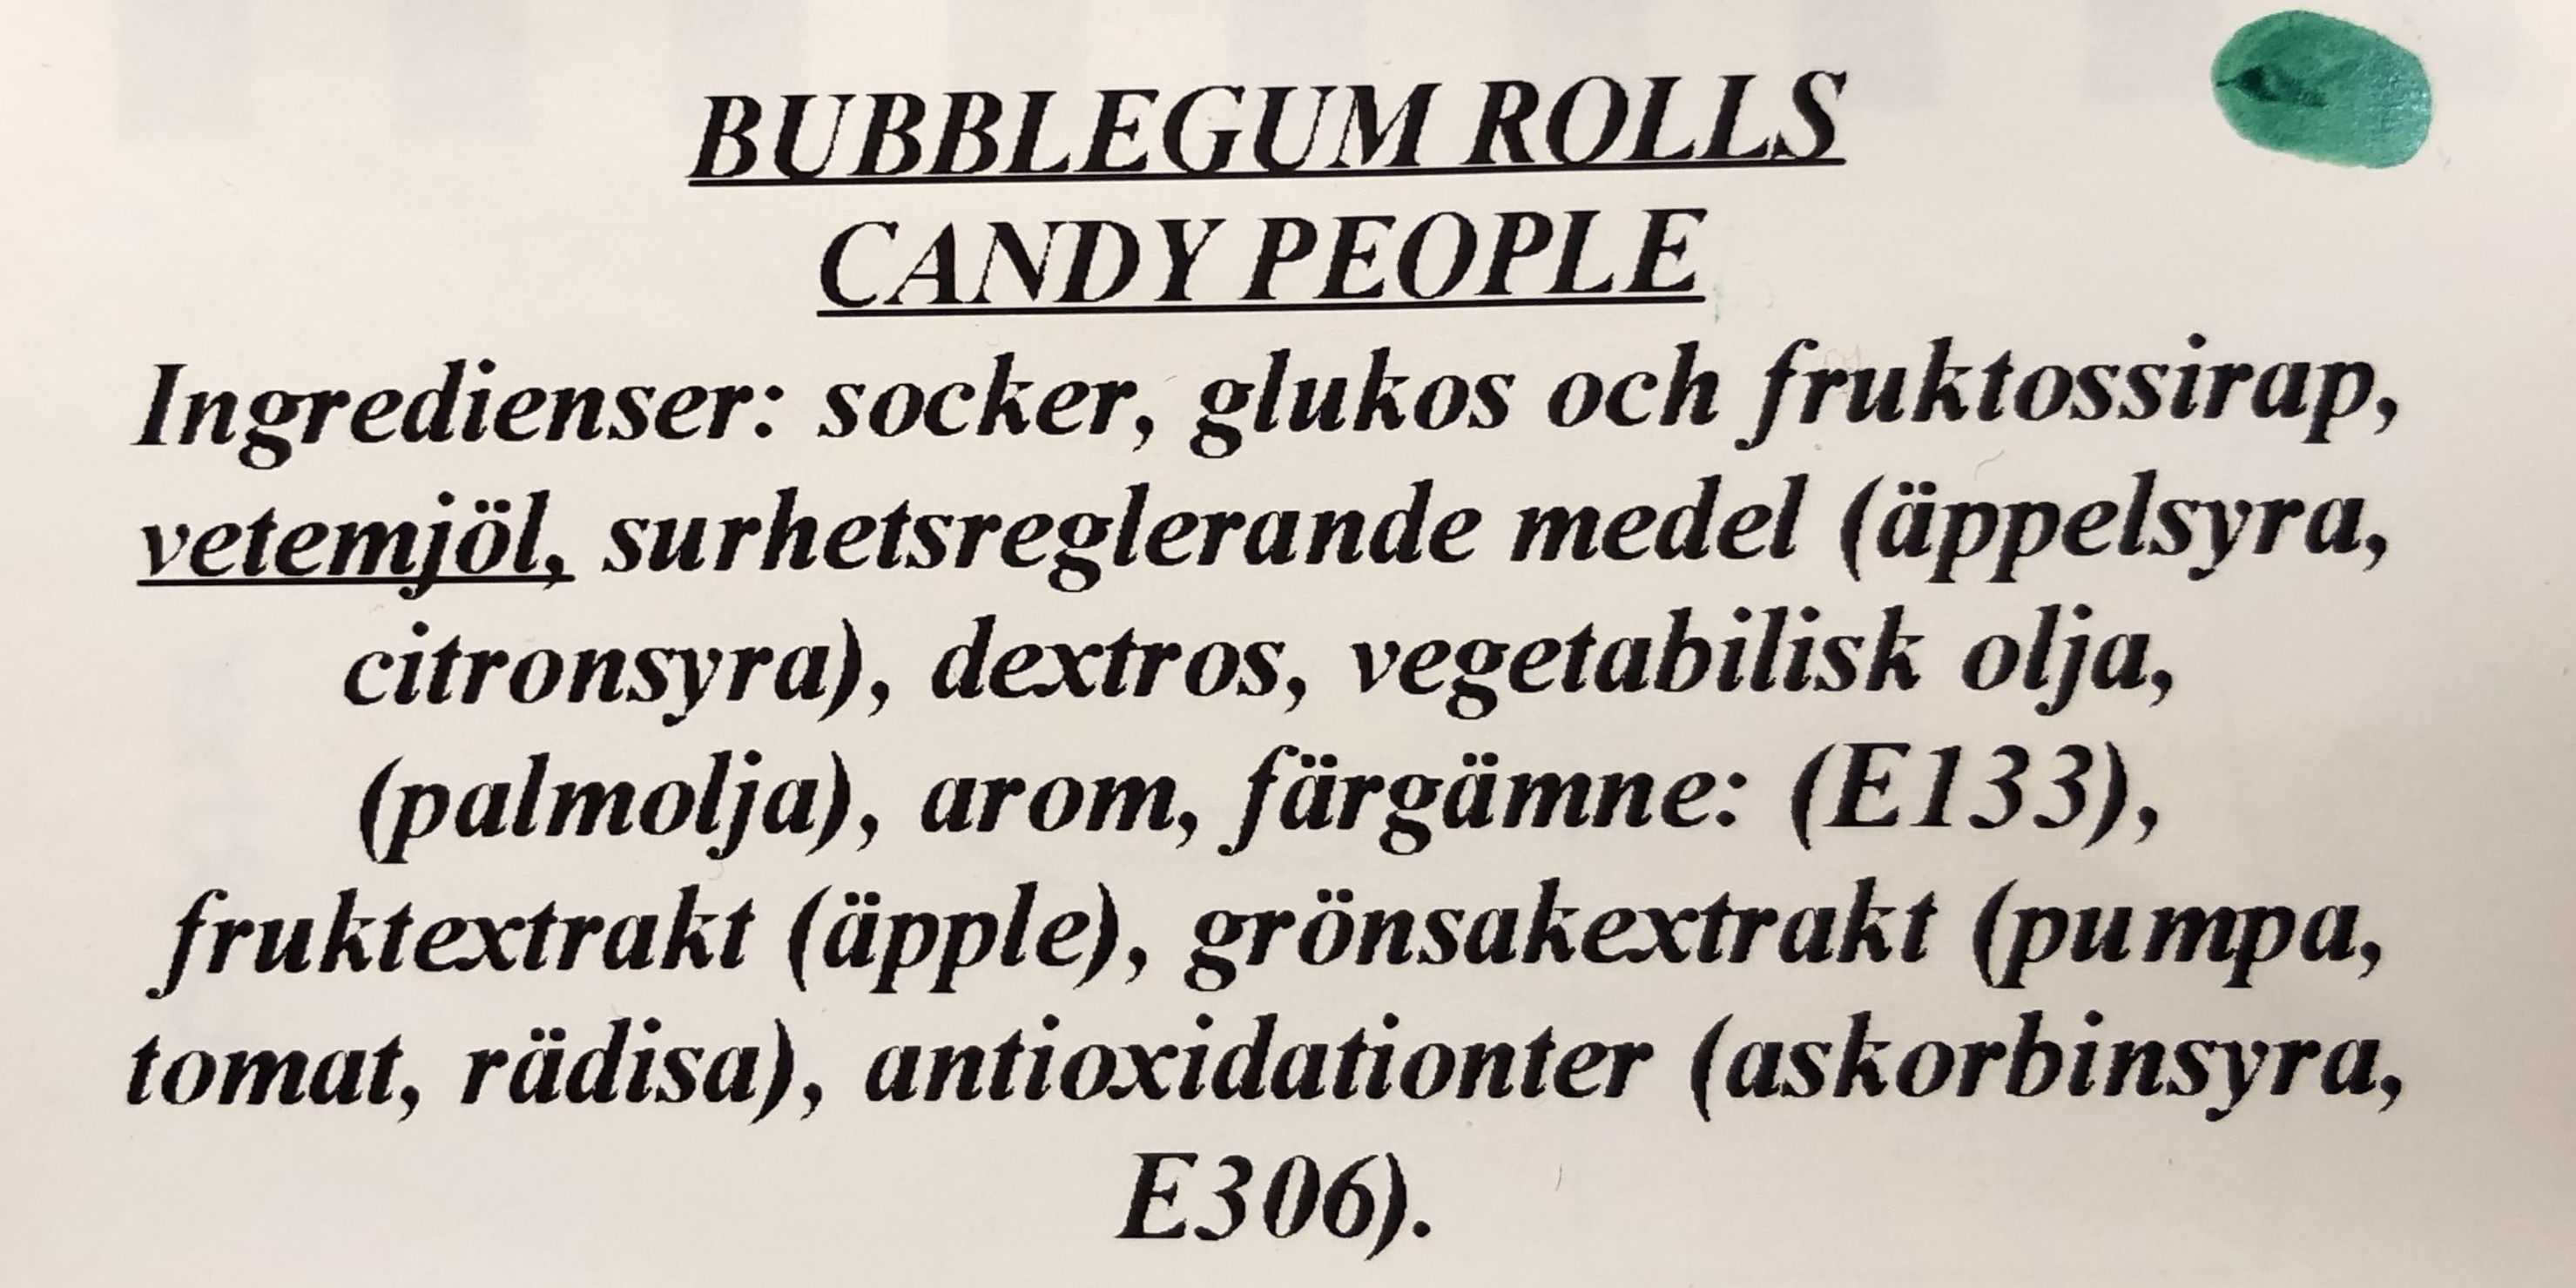 Bubblegum rolls